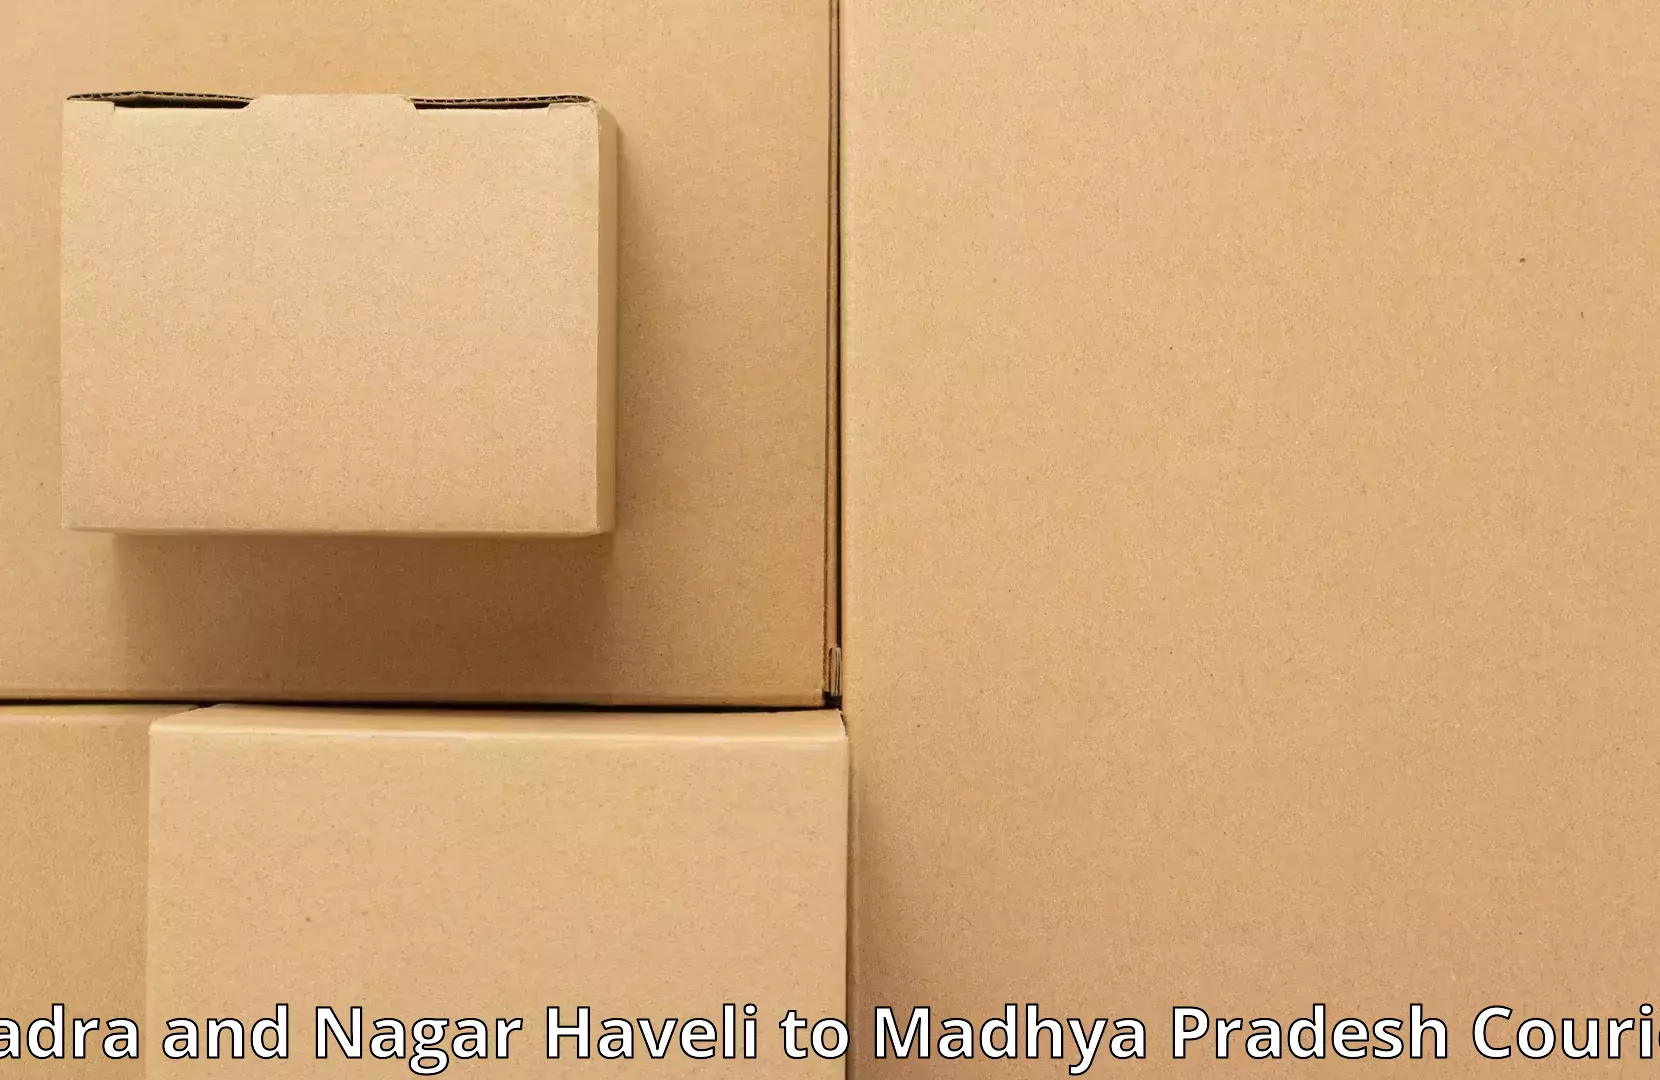 Furniture delivery service Dadra and Nagar Haveli to Chhindwara